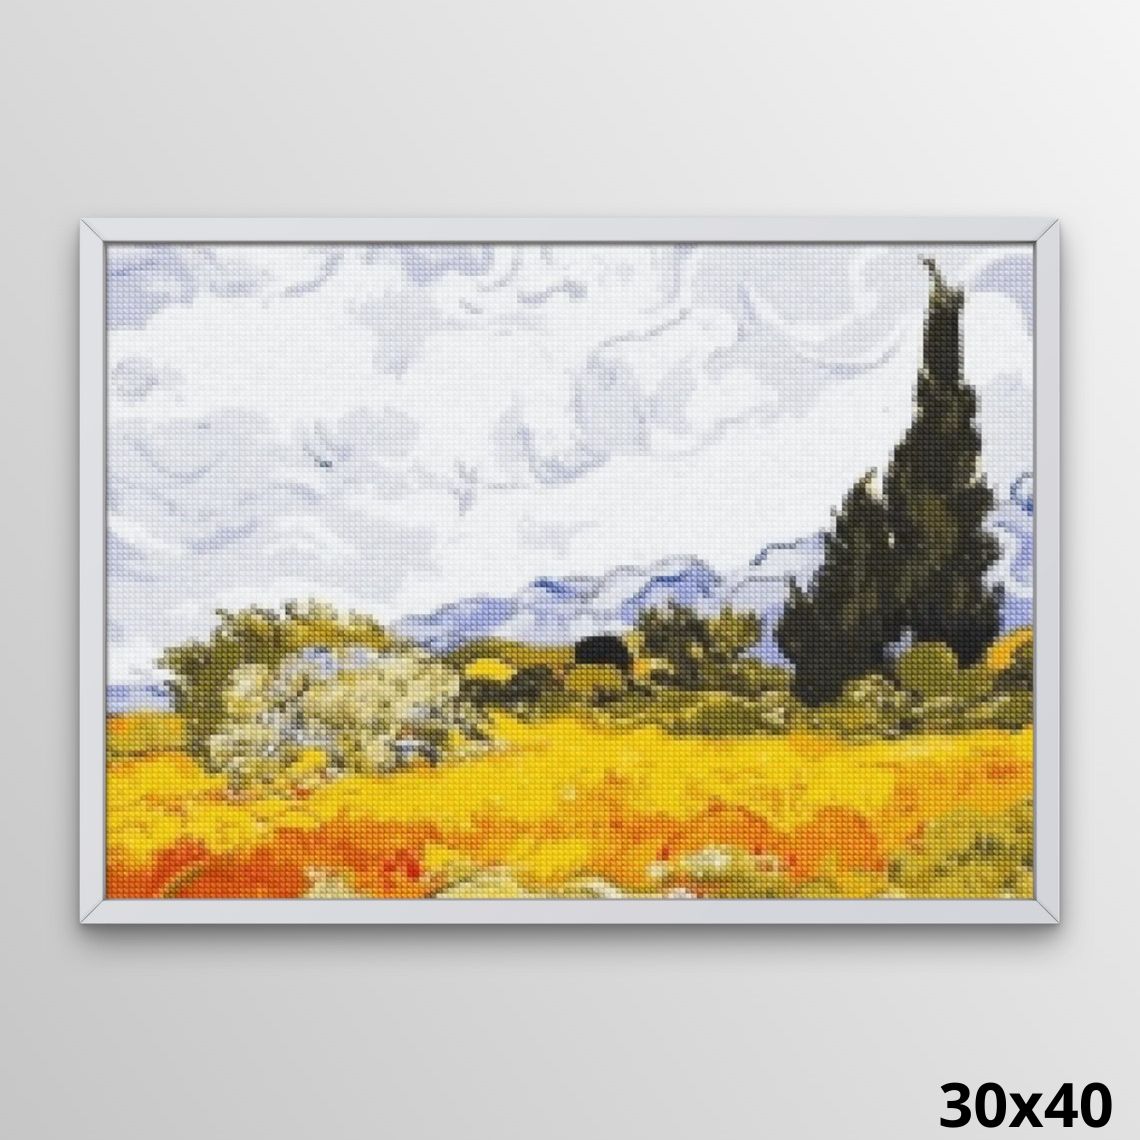 Van Gogh Wheat Field with Cypresses 30x40 Diamond Art